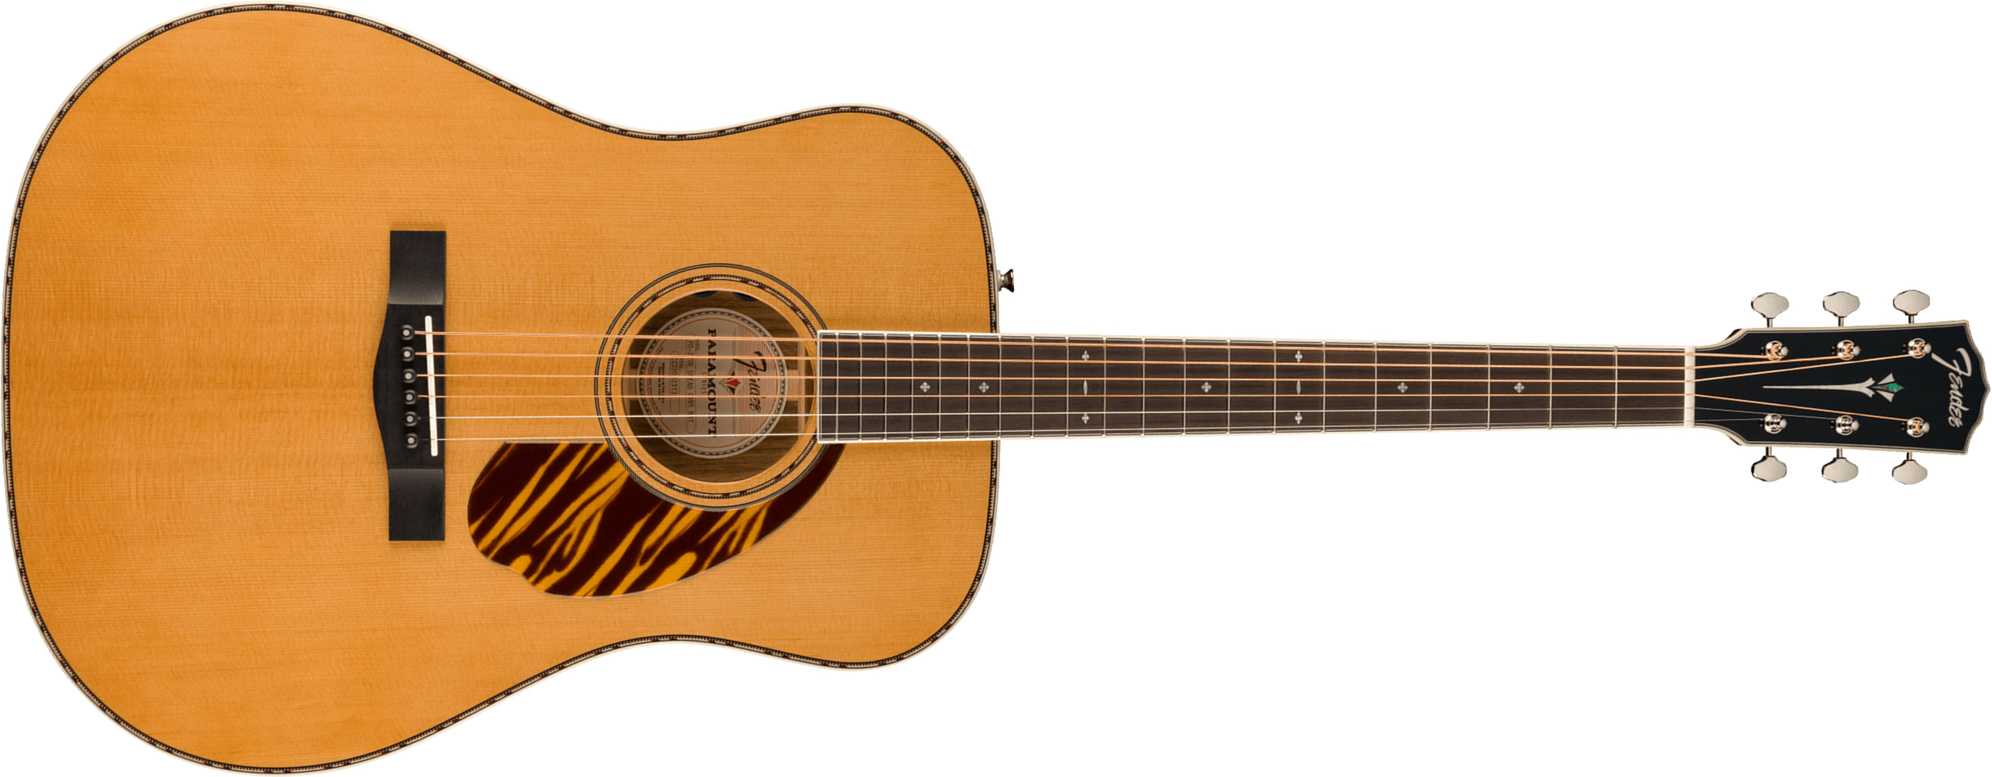 Fender Pd-220e Paramount Fsr Ltd Dreadnought Epicea Ovangkol Ova - Aged Natural - Electro acoustic guitar - Main picture